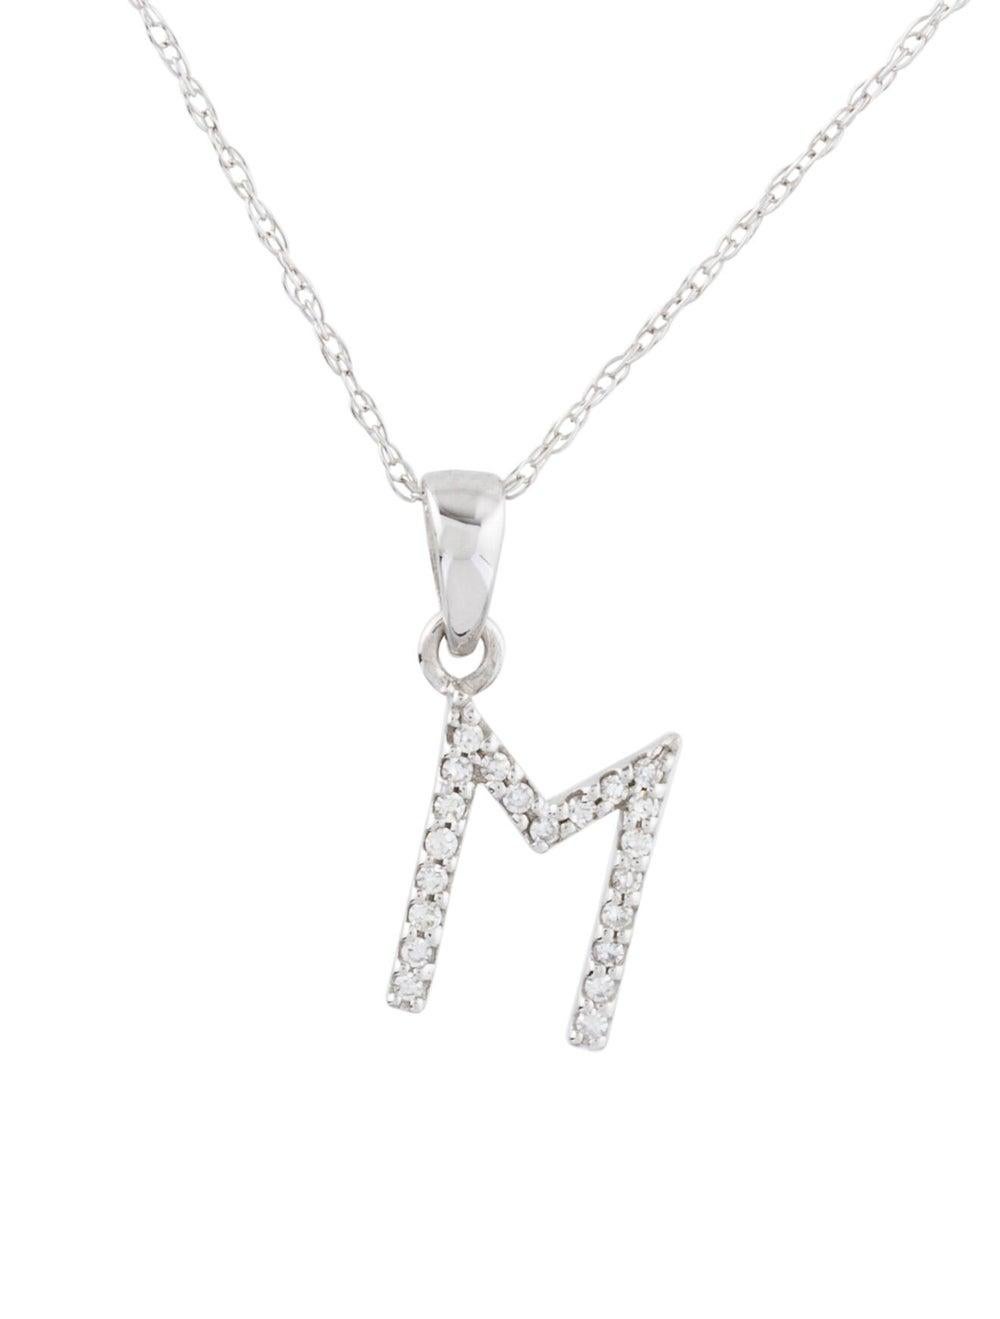 Contemporary 14 Karat White Gold 0.06 Carat Diamond Initial Pendant Necklace, Initial M For Sale